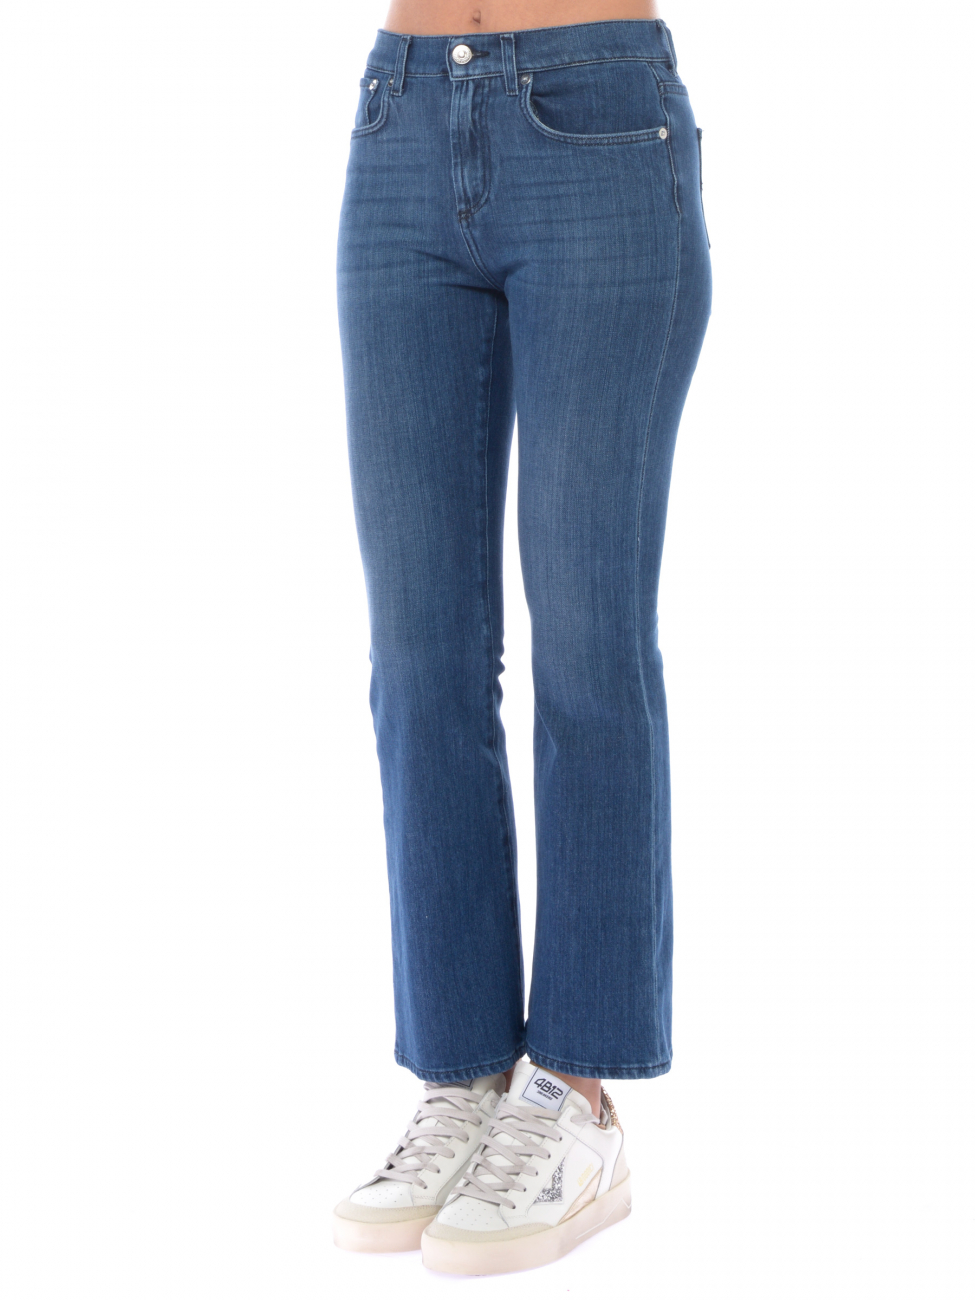 jeans da donna Roy Roger's Bootcut cinque tasche